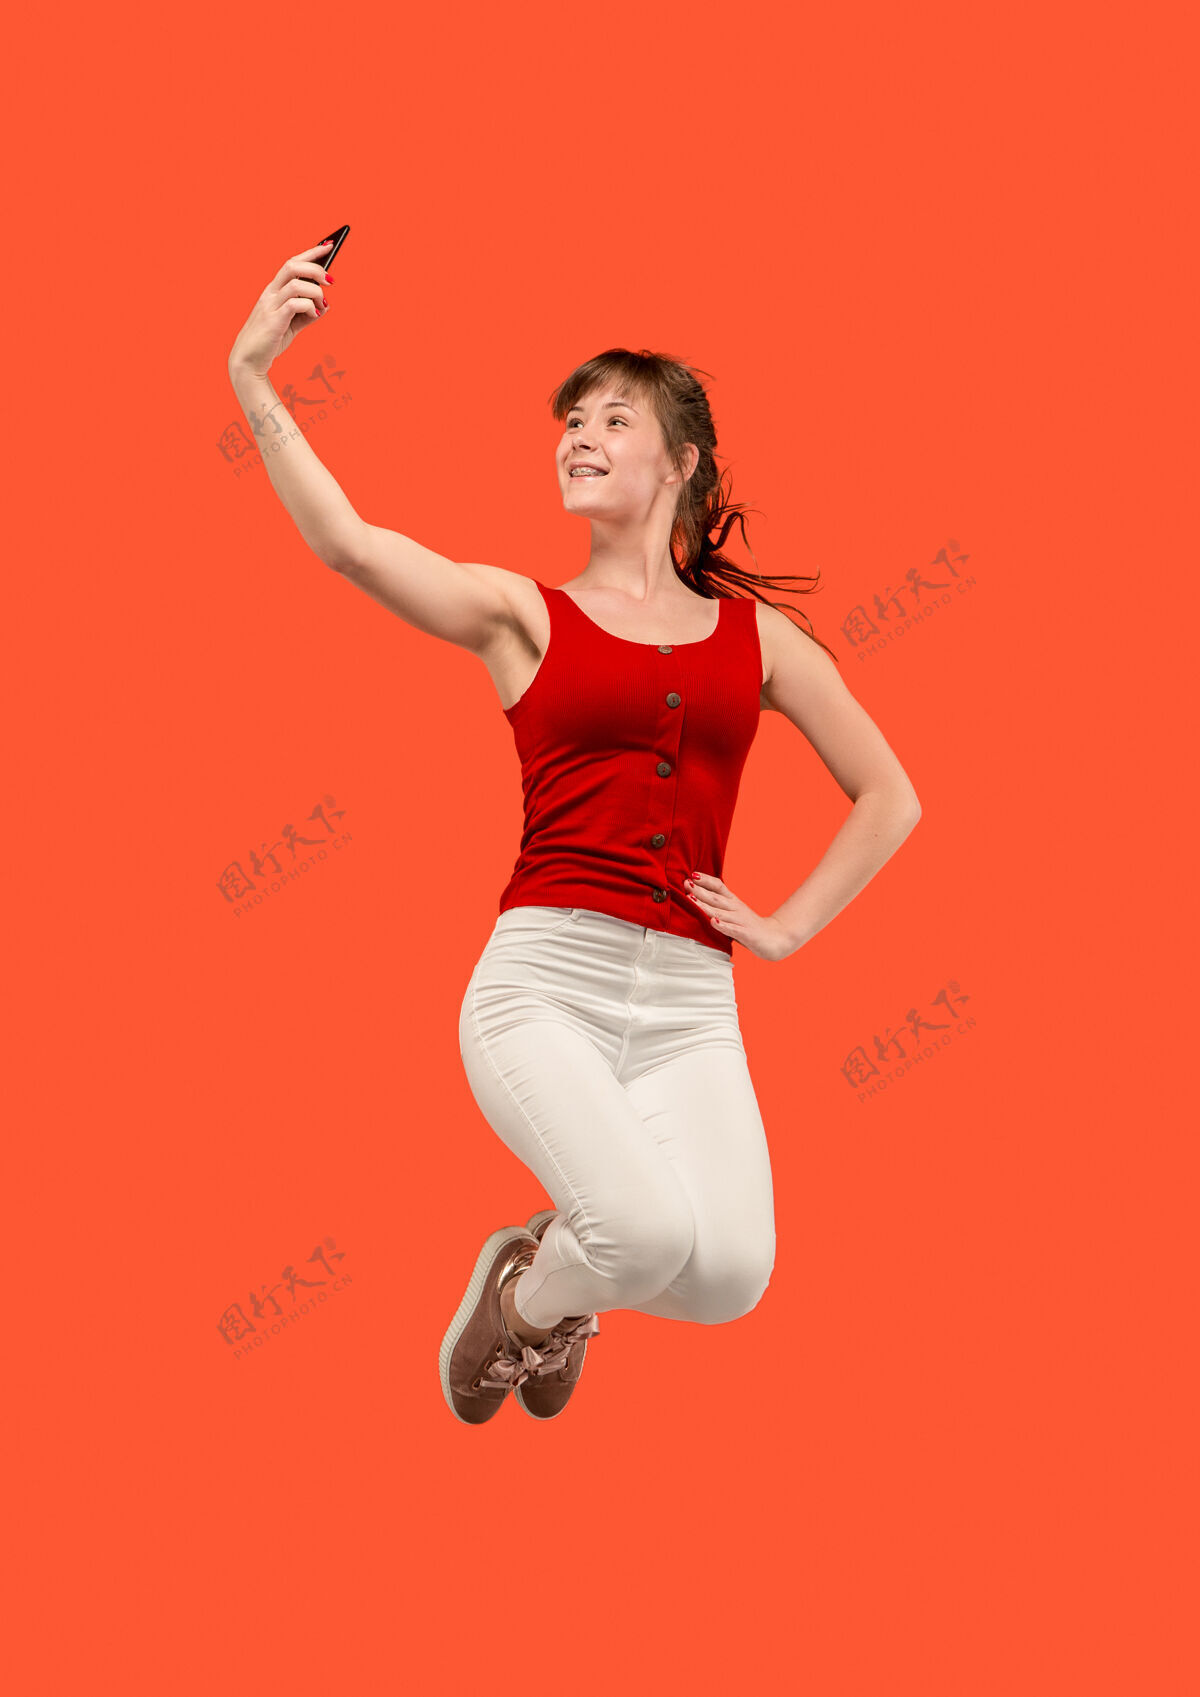 Ok一直在移动完整长度的漂亮年轻女子拿着手机和自拍 同时在红色工作室背景下跳跃移动 运动 运动 商业概念能量自拍电话